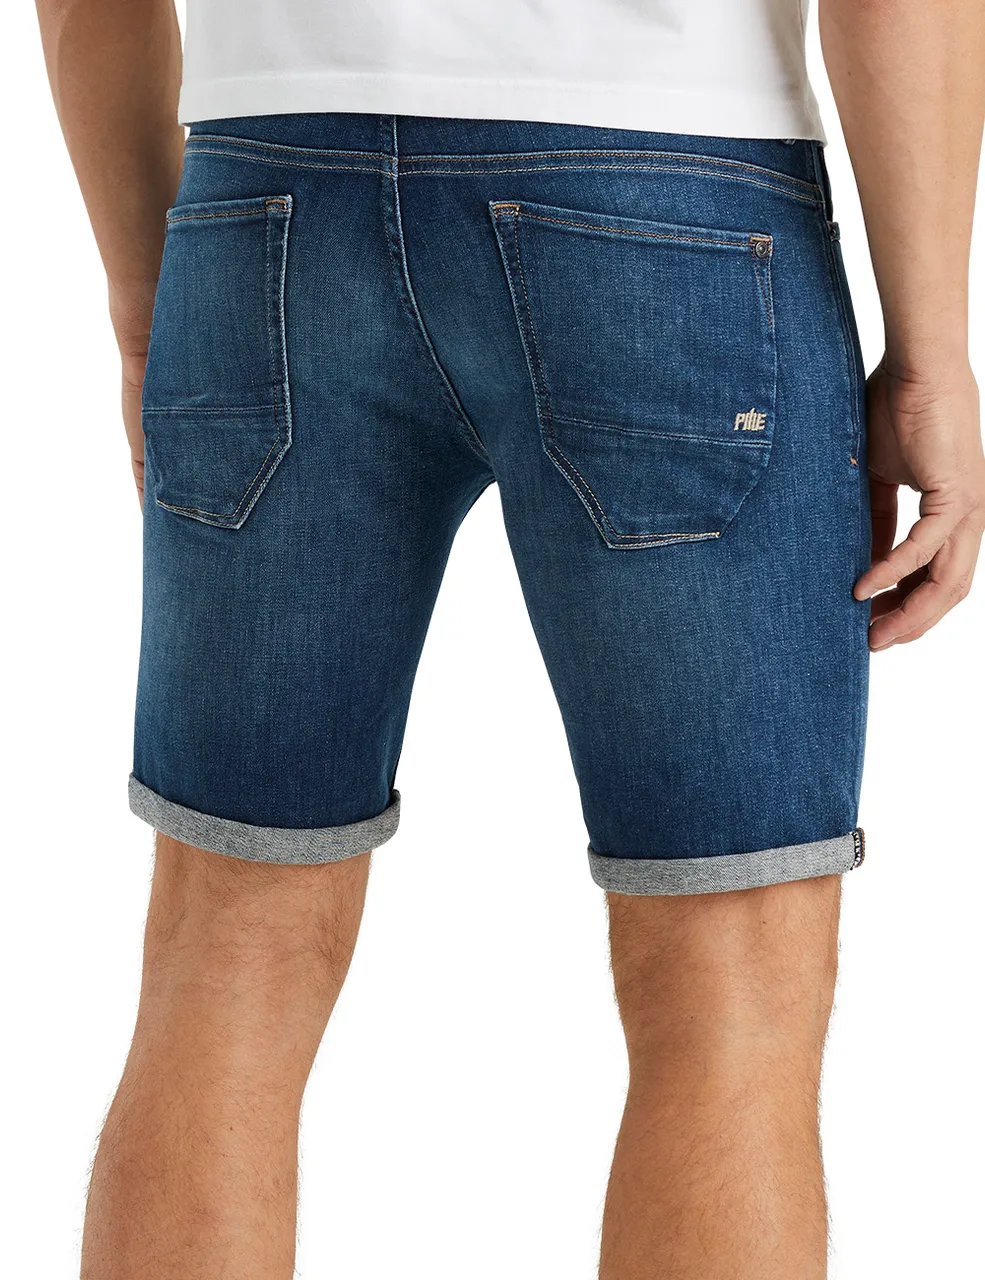 PME Legend Herren Jeans Short NIGHTFLIGHT - Regular Fit - Blau - Grau